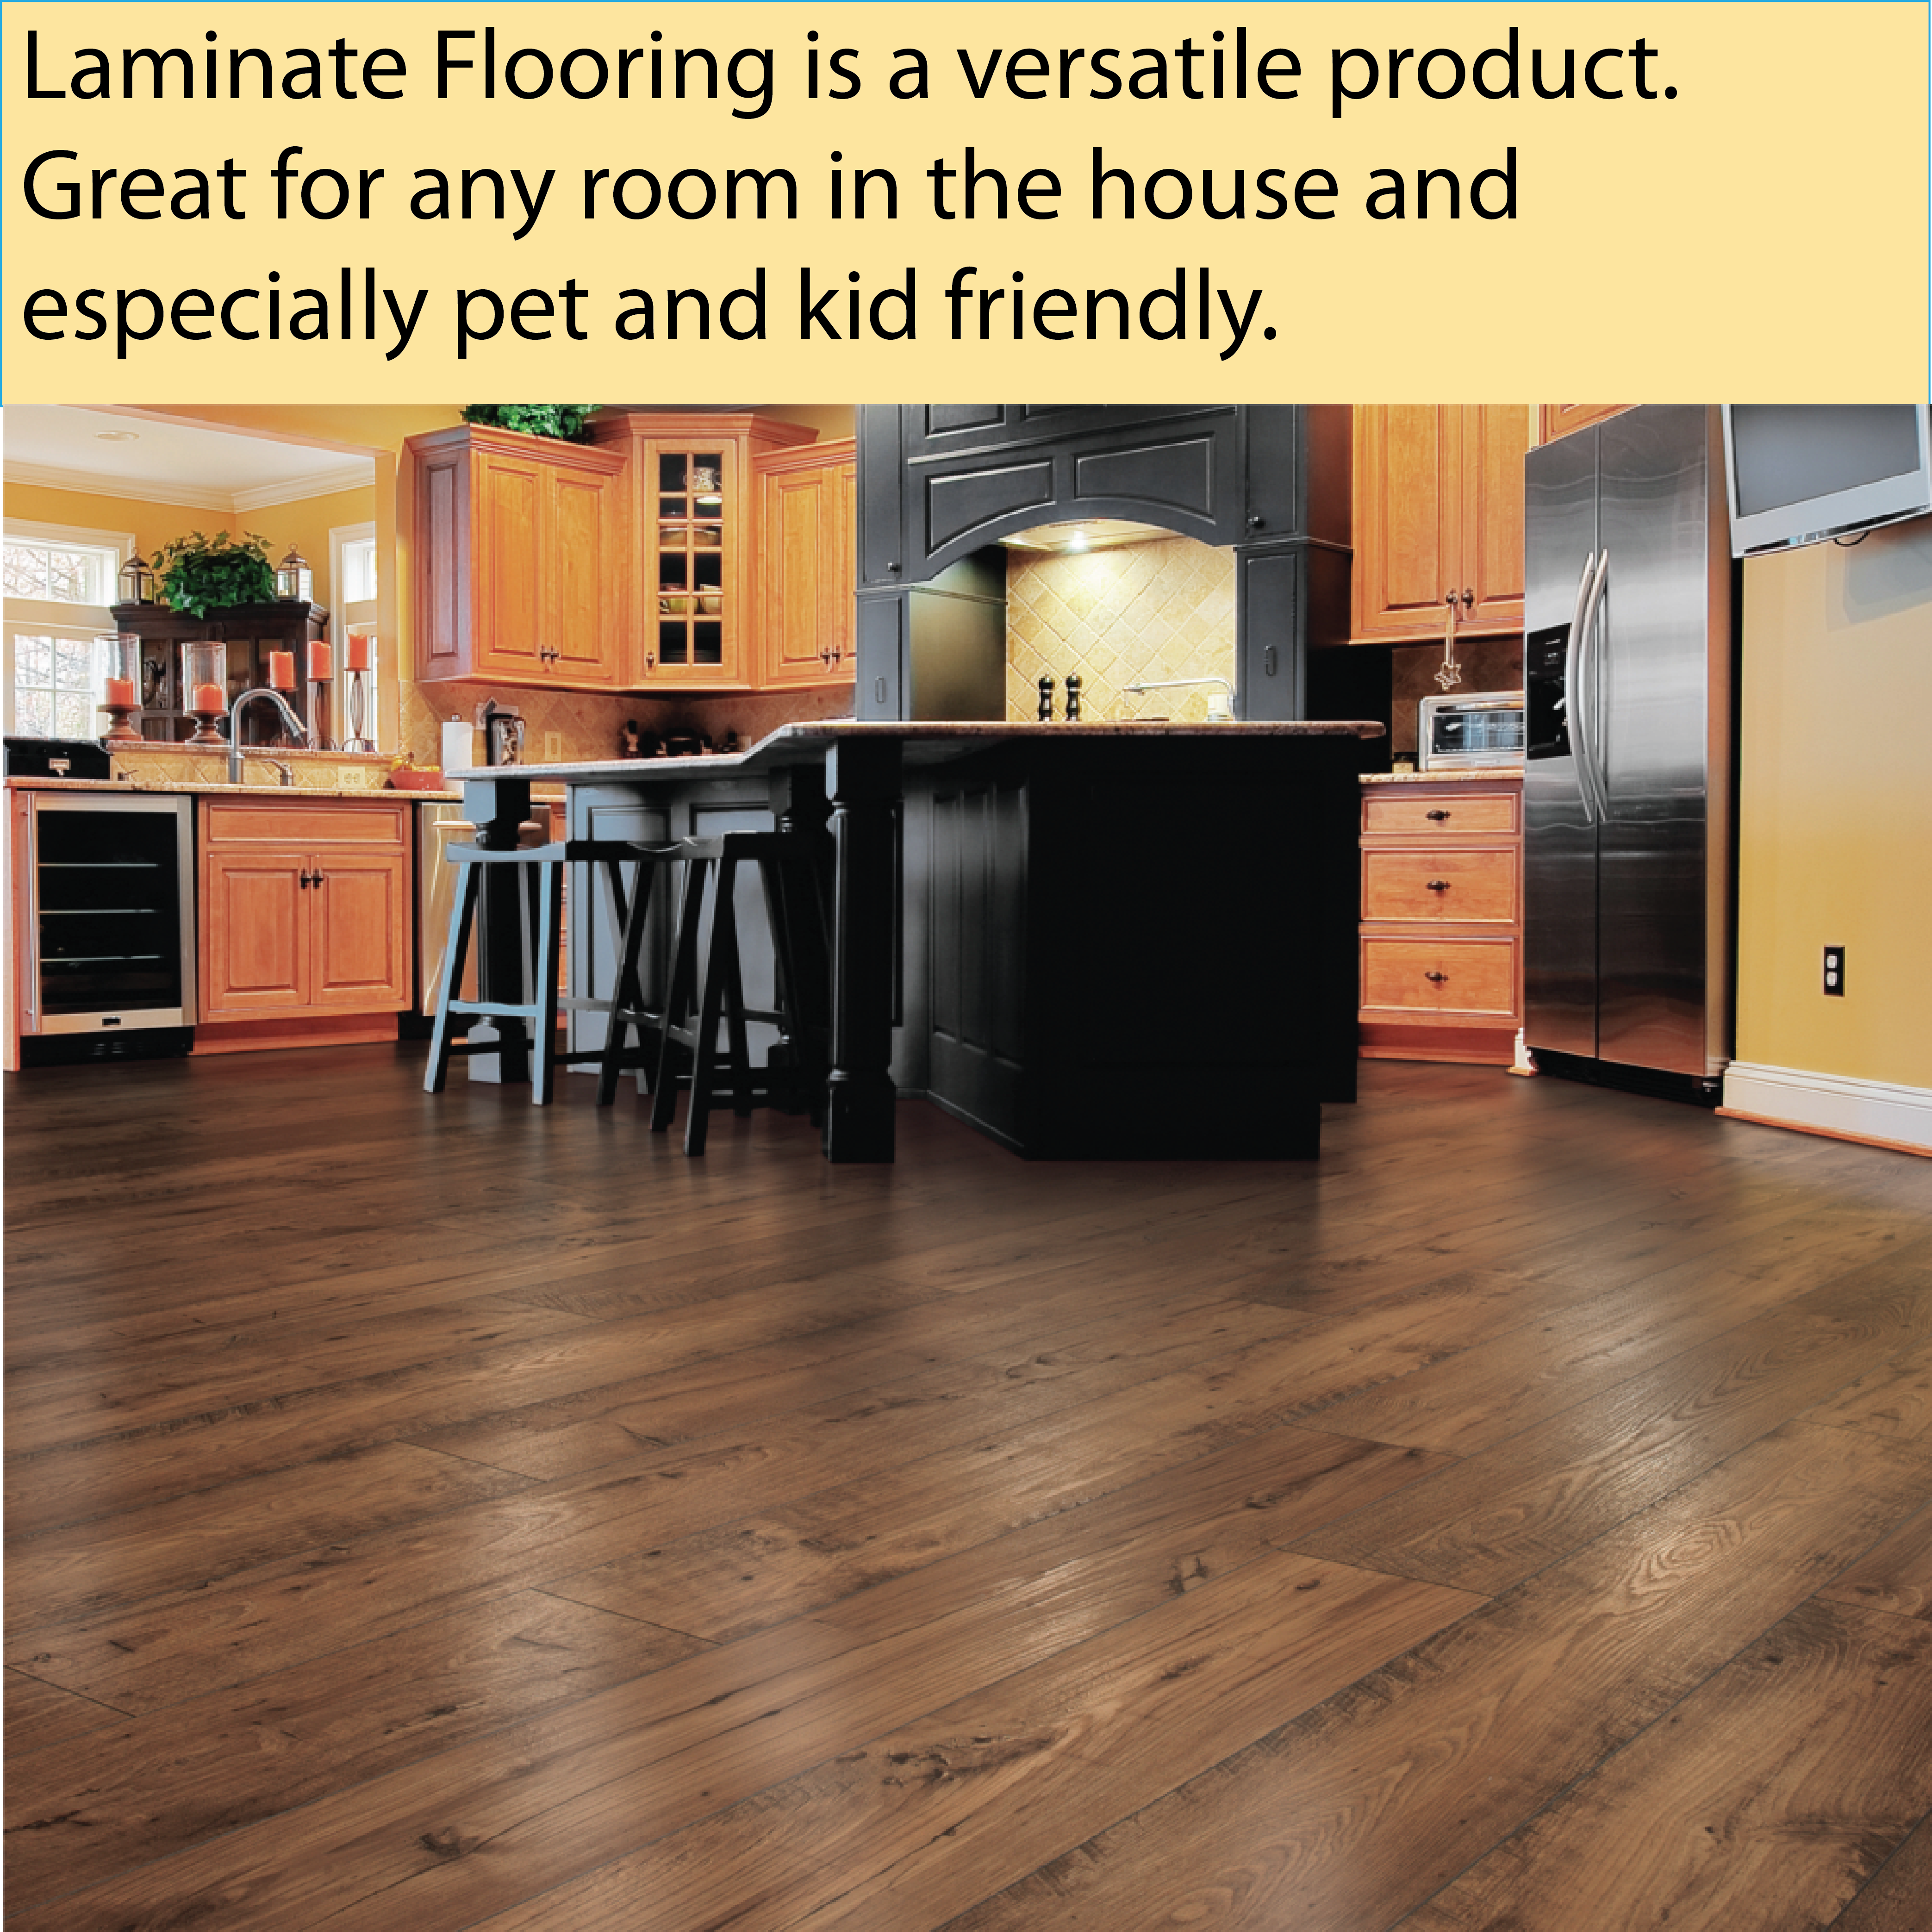 Laminate Flooring, wood laminate, pergo flooring, hardwood laminate